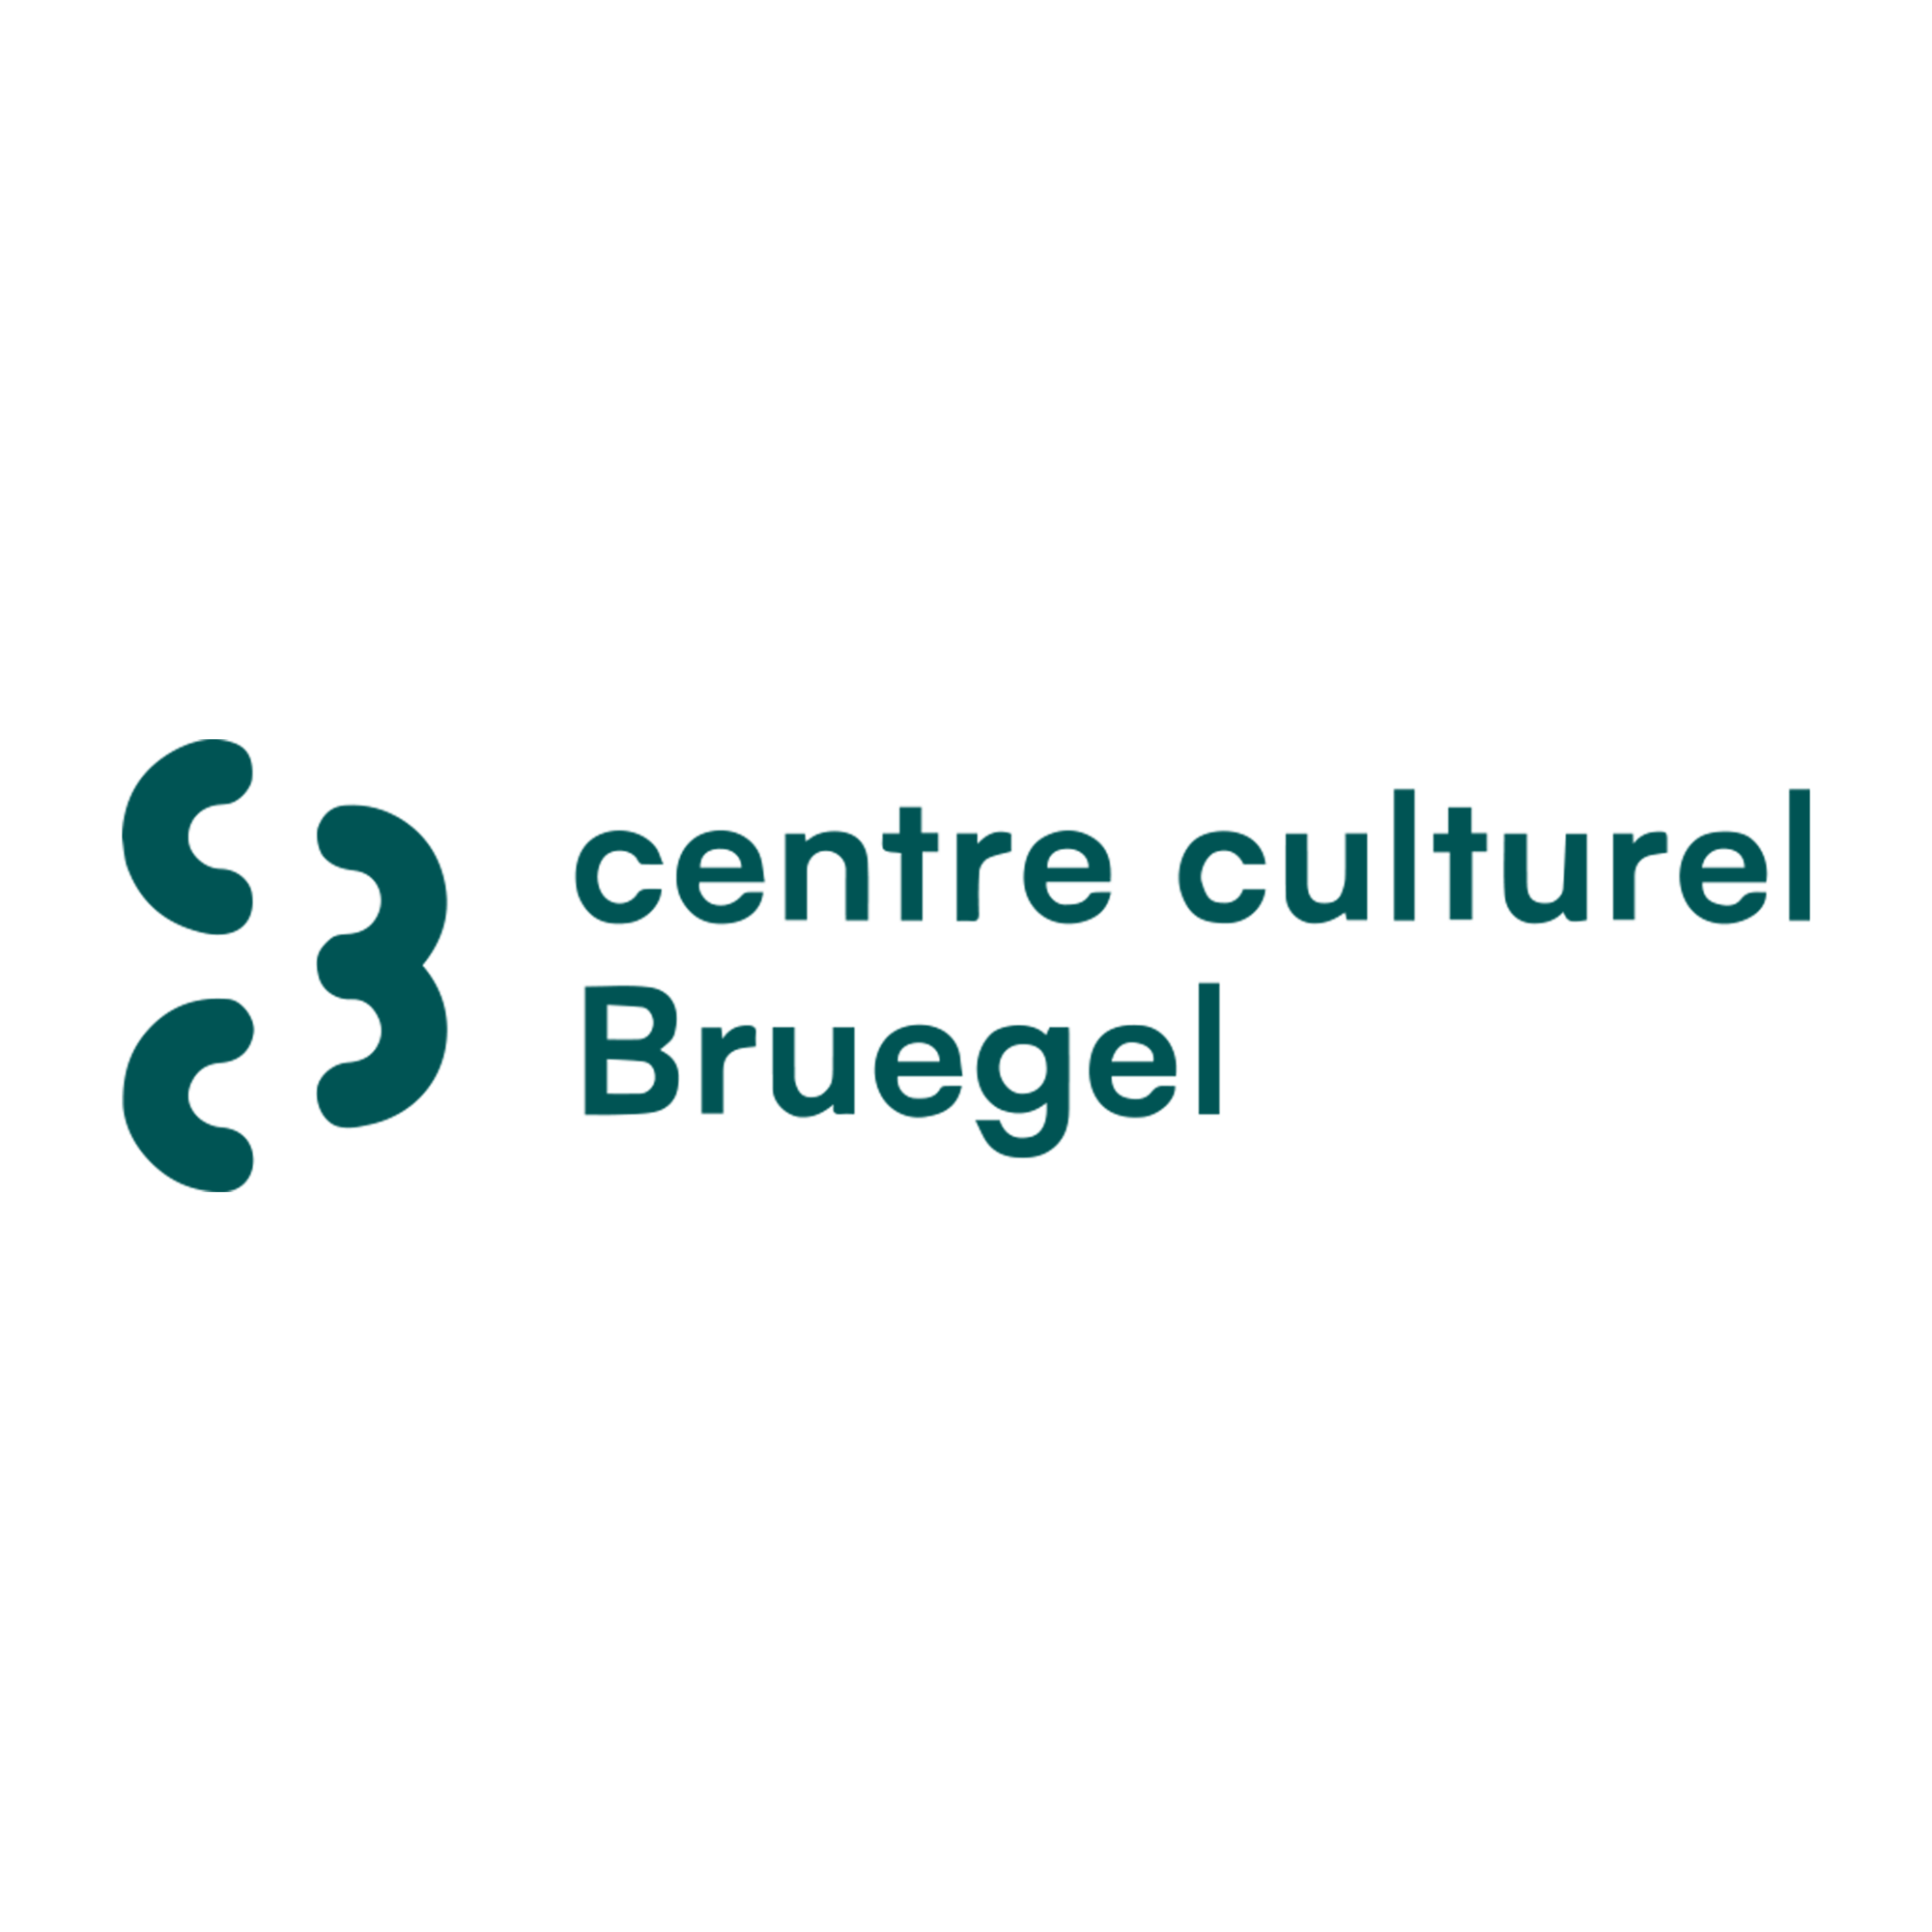 Centre Culturel Bruegel